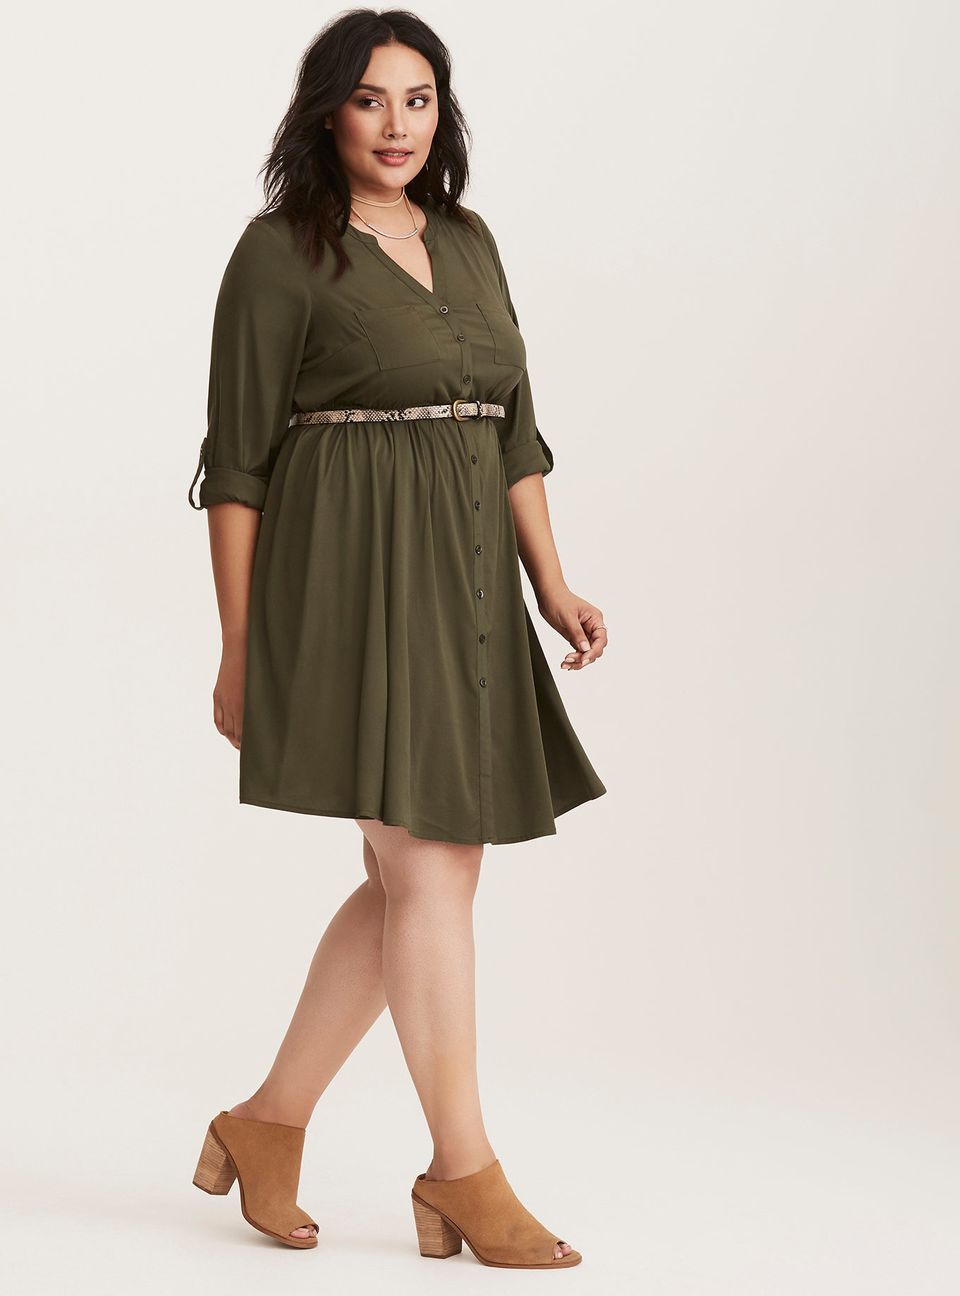 Sassy Set Olive -   Plus size fashion, Curvy size fashion, Fall  fashion outfits